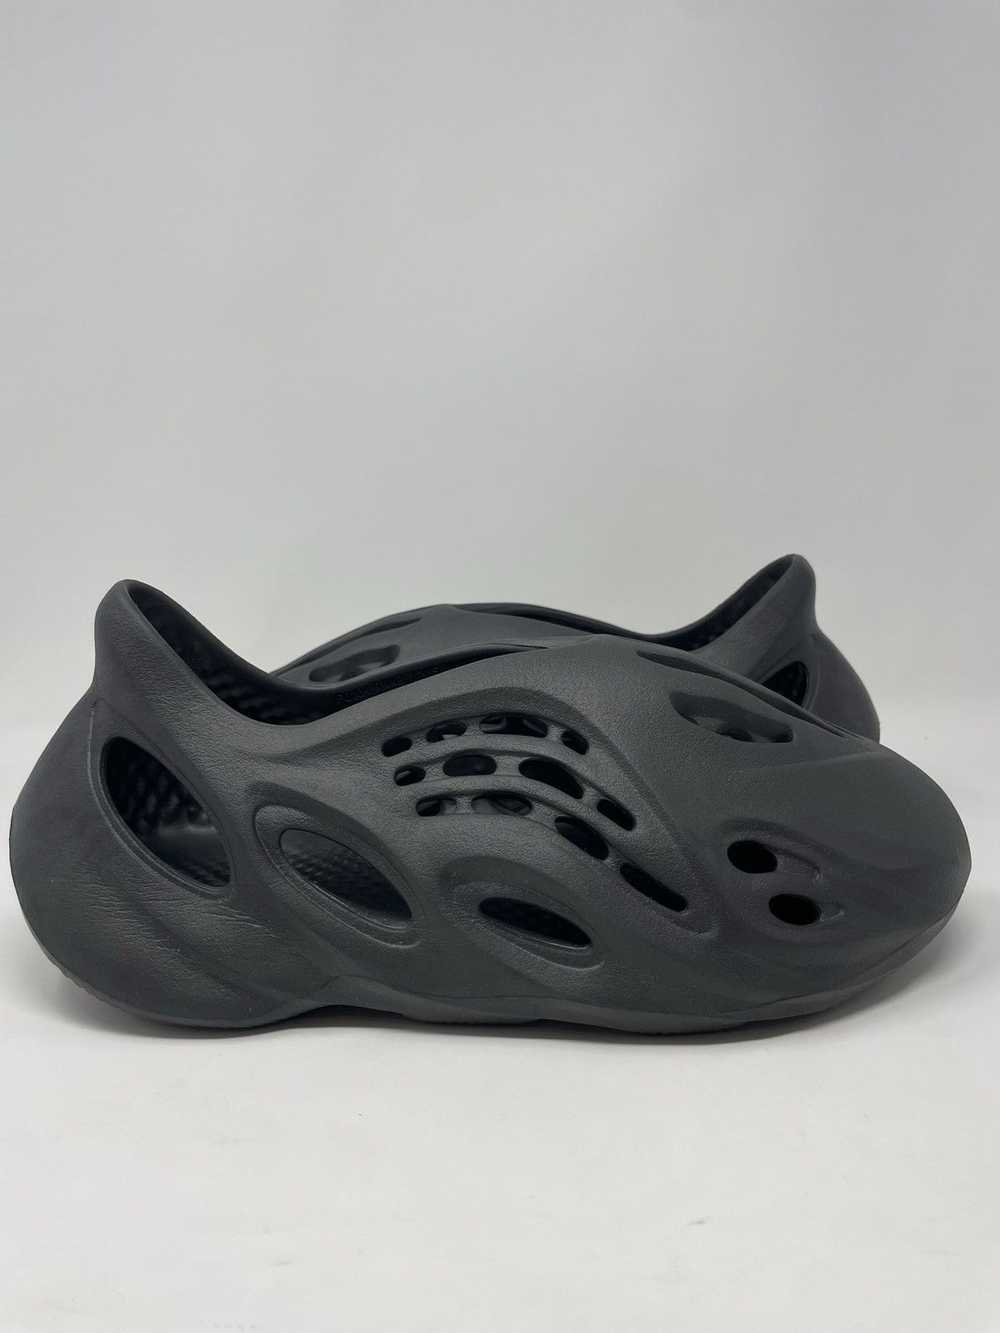 Adidas Yeezy Foam Runner Onyx - image 2